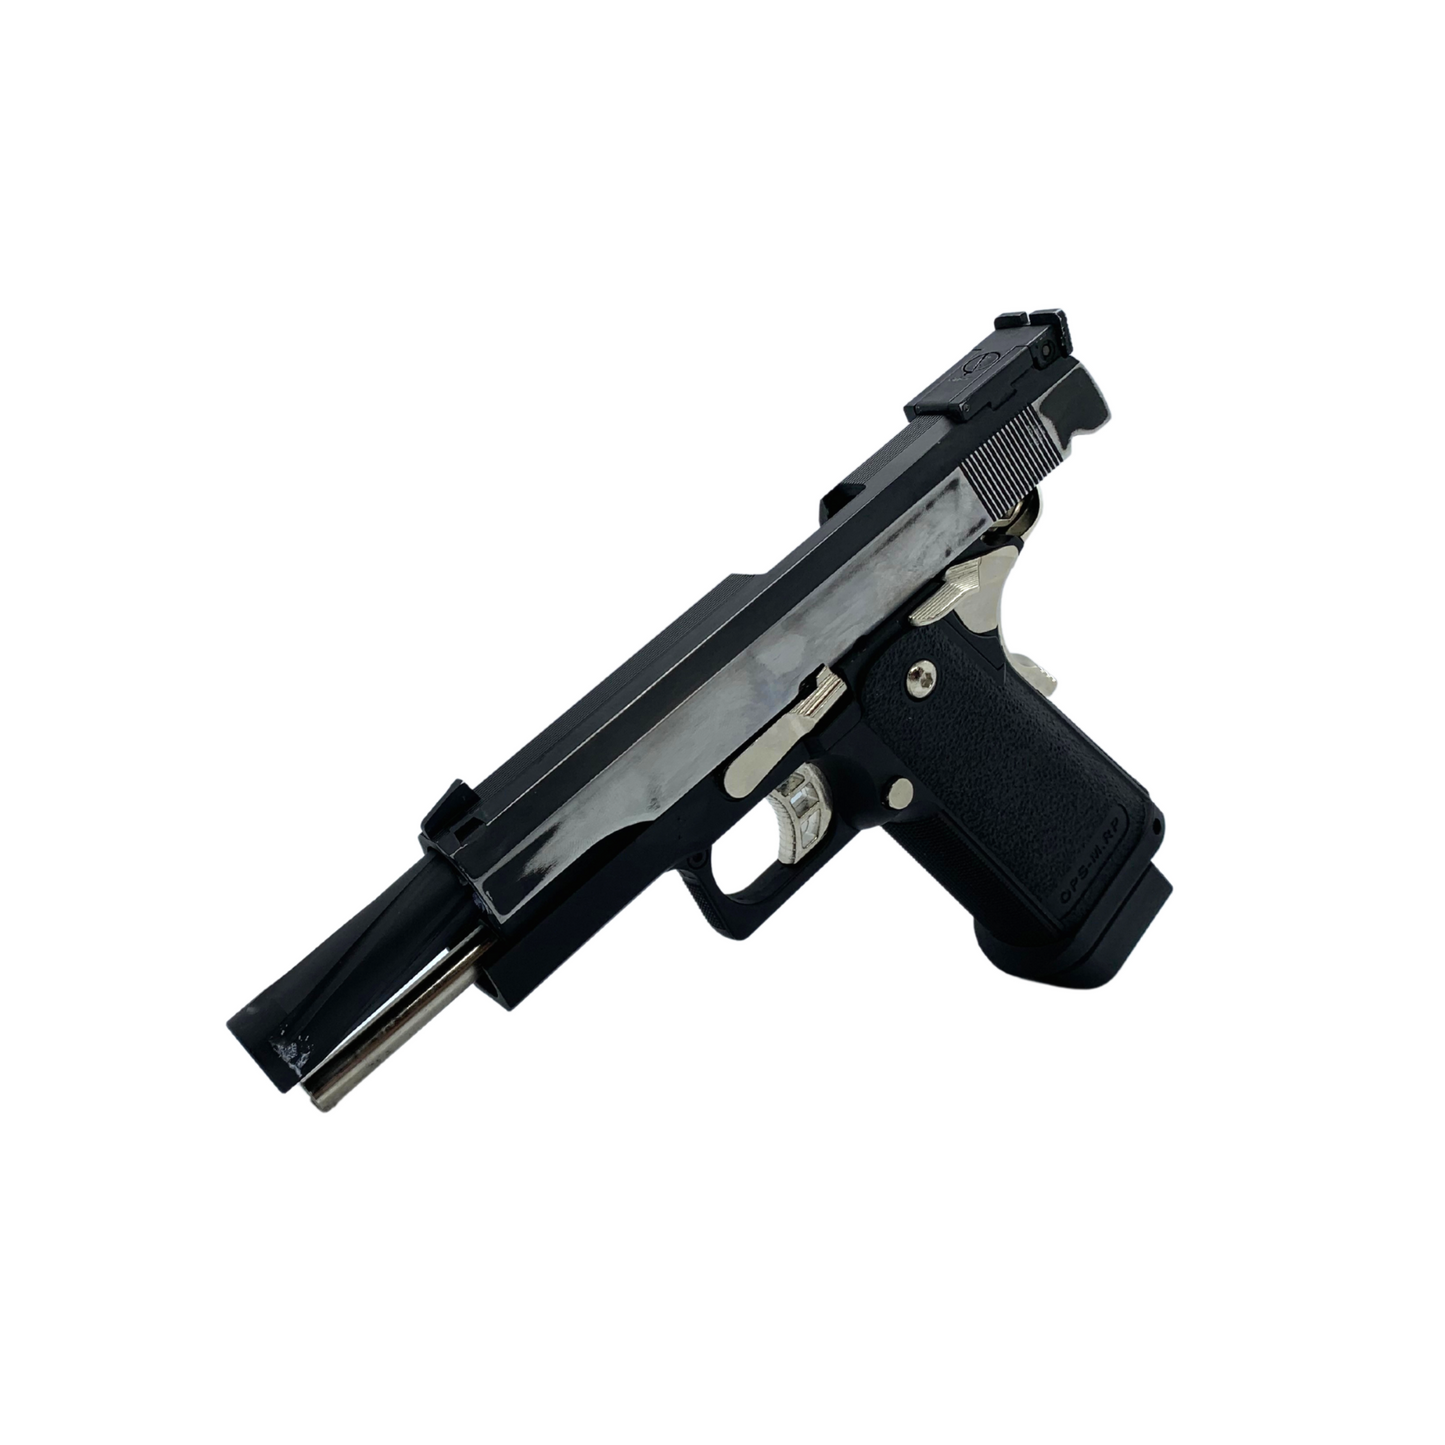 Custom "Battle Flare" Gas Pistol - Gel Blaster